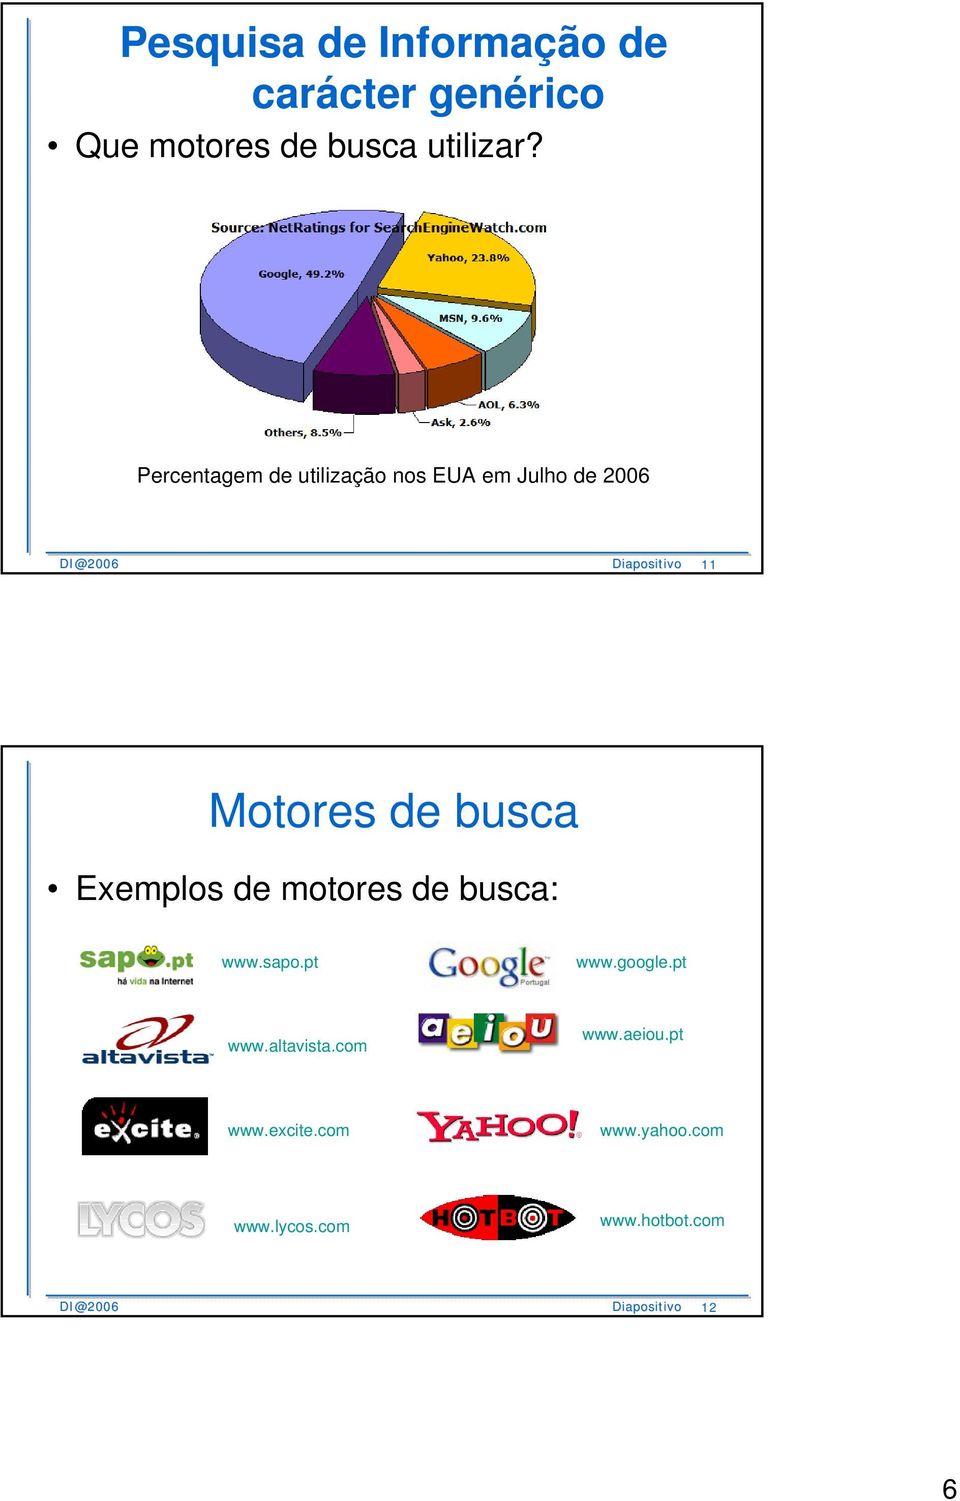 Exemplos de motores de busca: www.sapo.pt www.google.pt www.altavista.